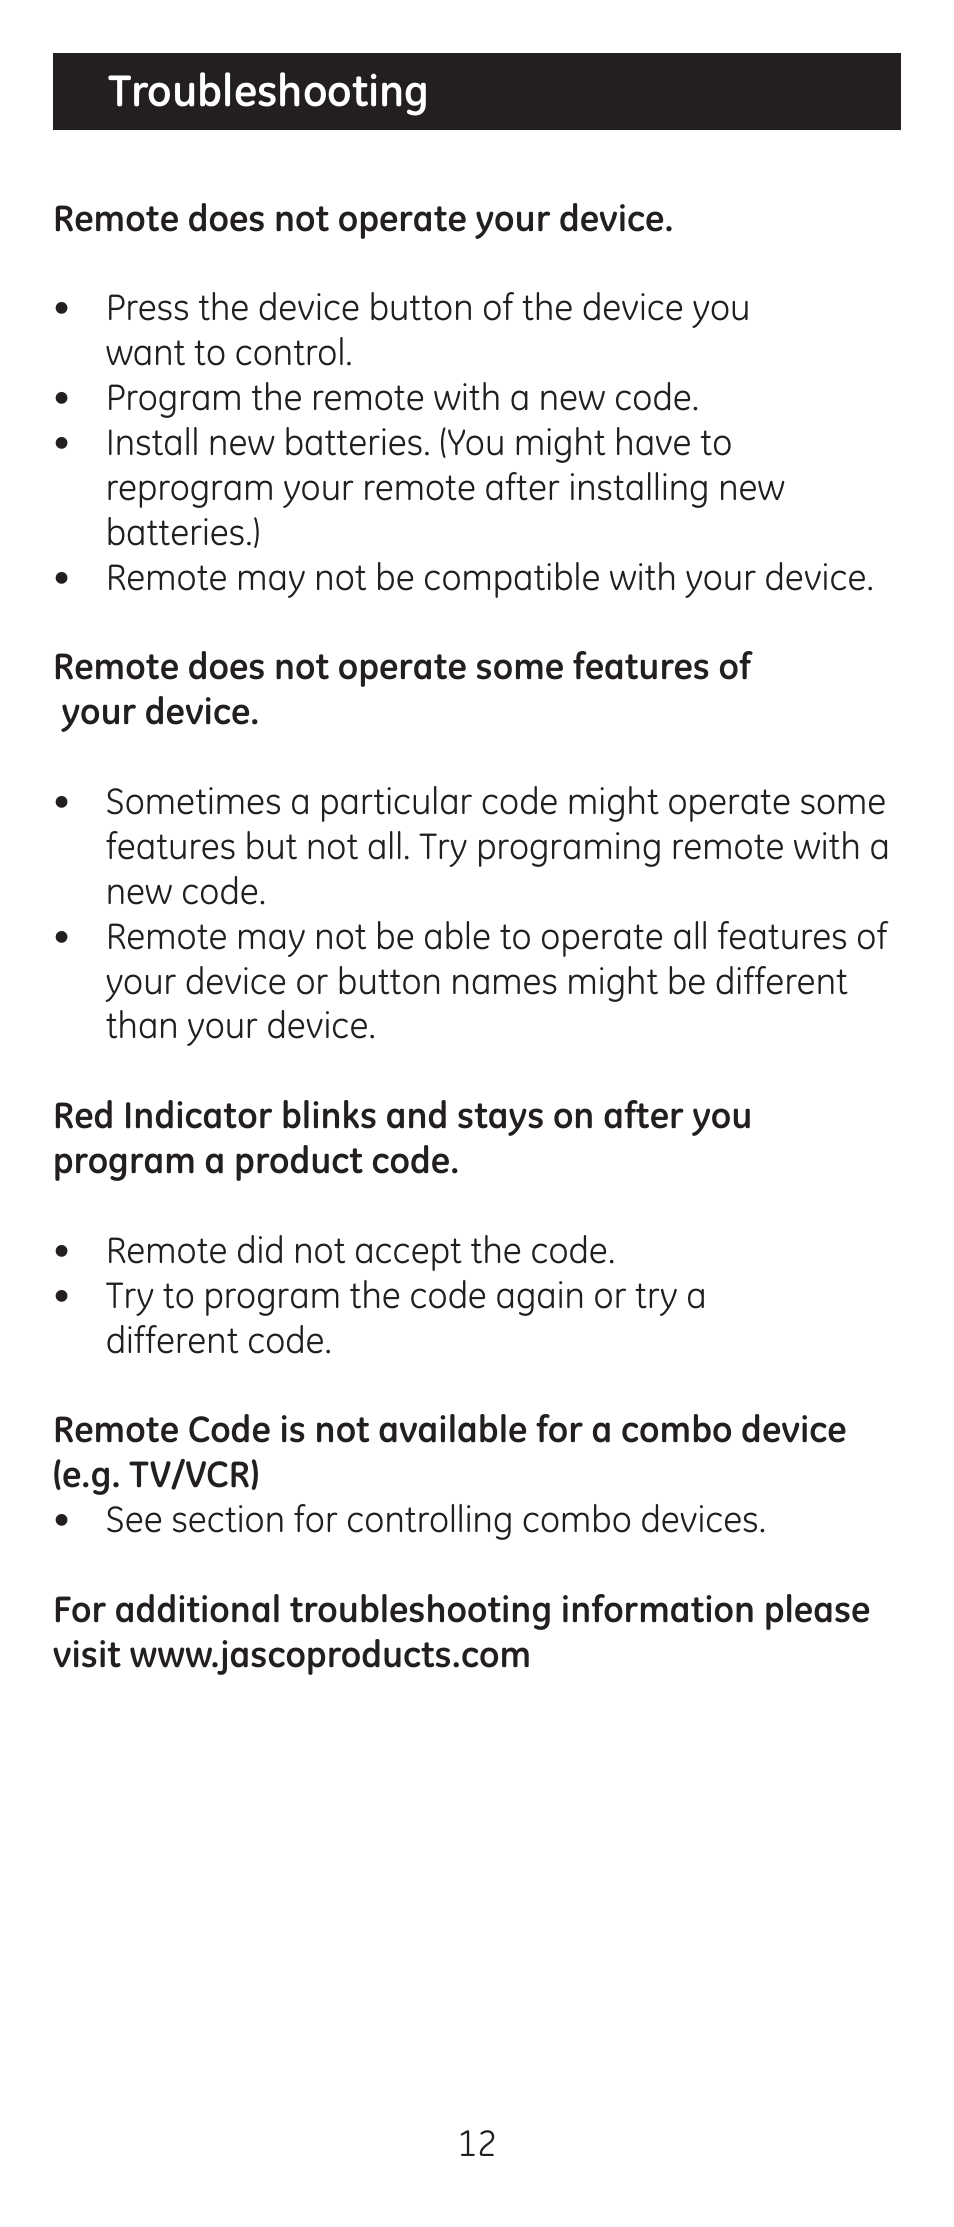 Troubleshooting | GE 24116-v2 GE Big Button Blue LED Backlit Remote Control User Manual | Page 12 / 42